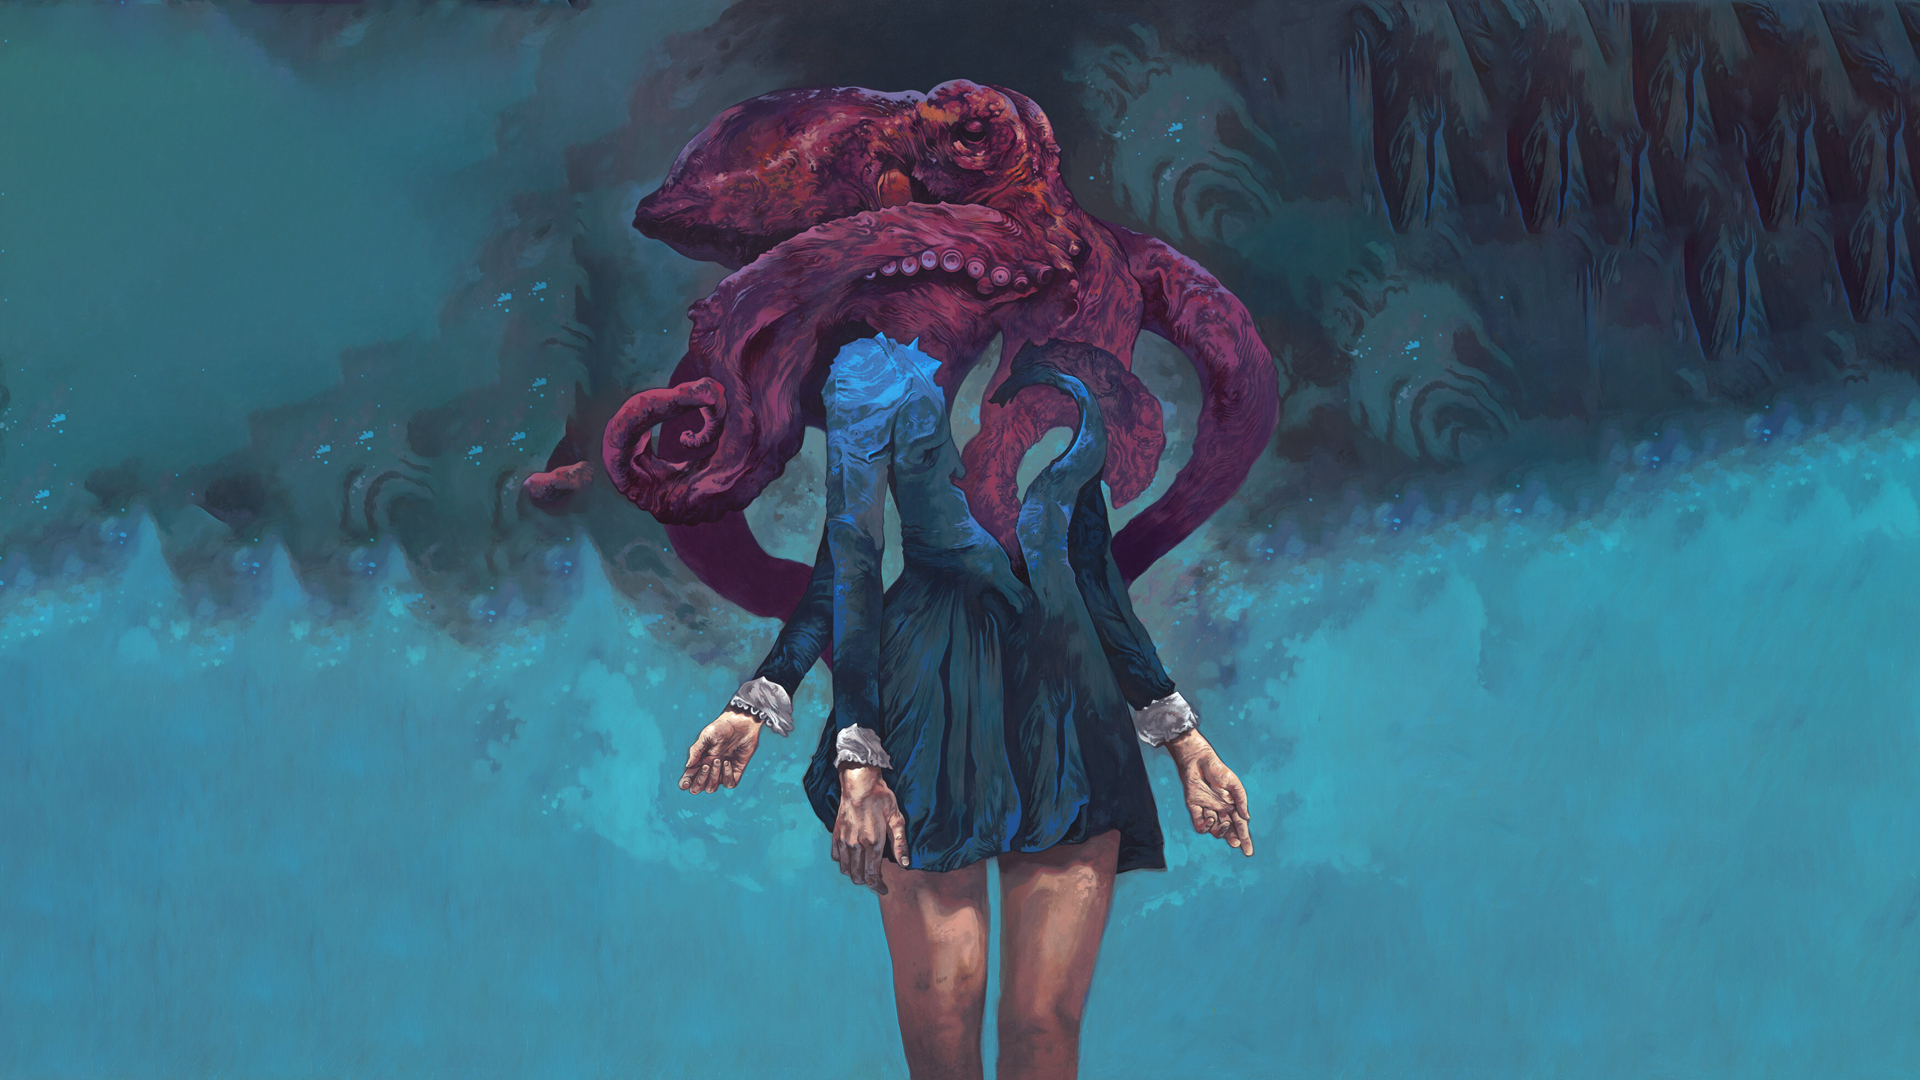 Digital Art Artwork Fantasy Art Women Octopus Black Anno 19 Cthulhu 1920x1080